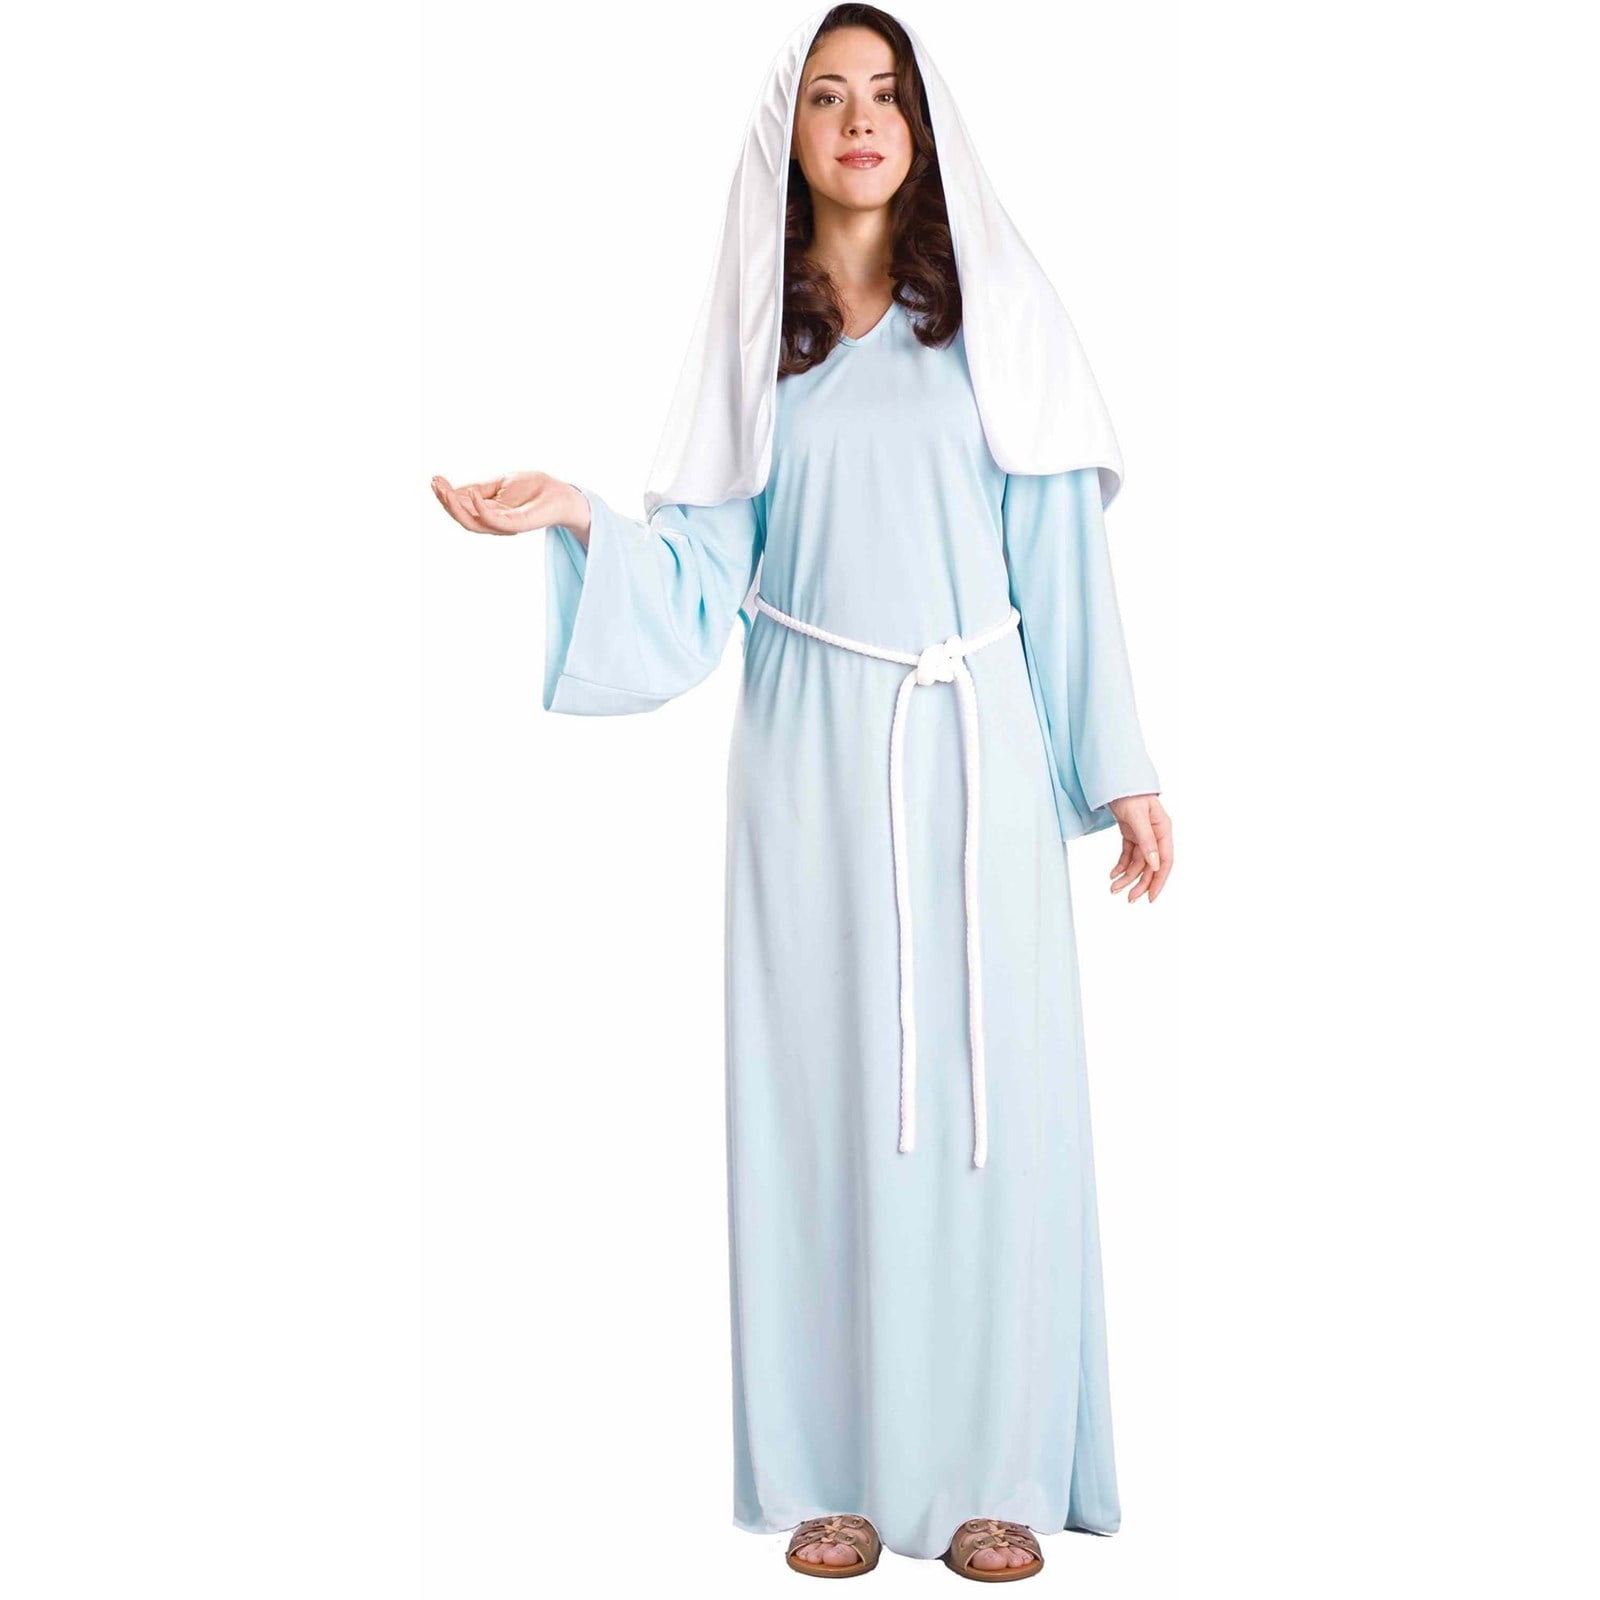 Women's Biblical Mary Costume - Walmart.com.